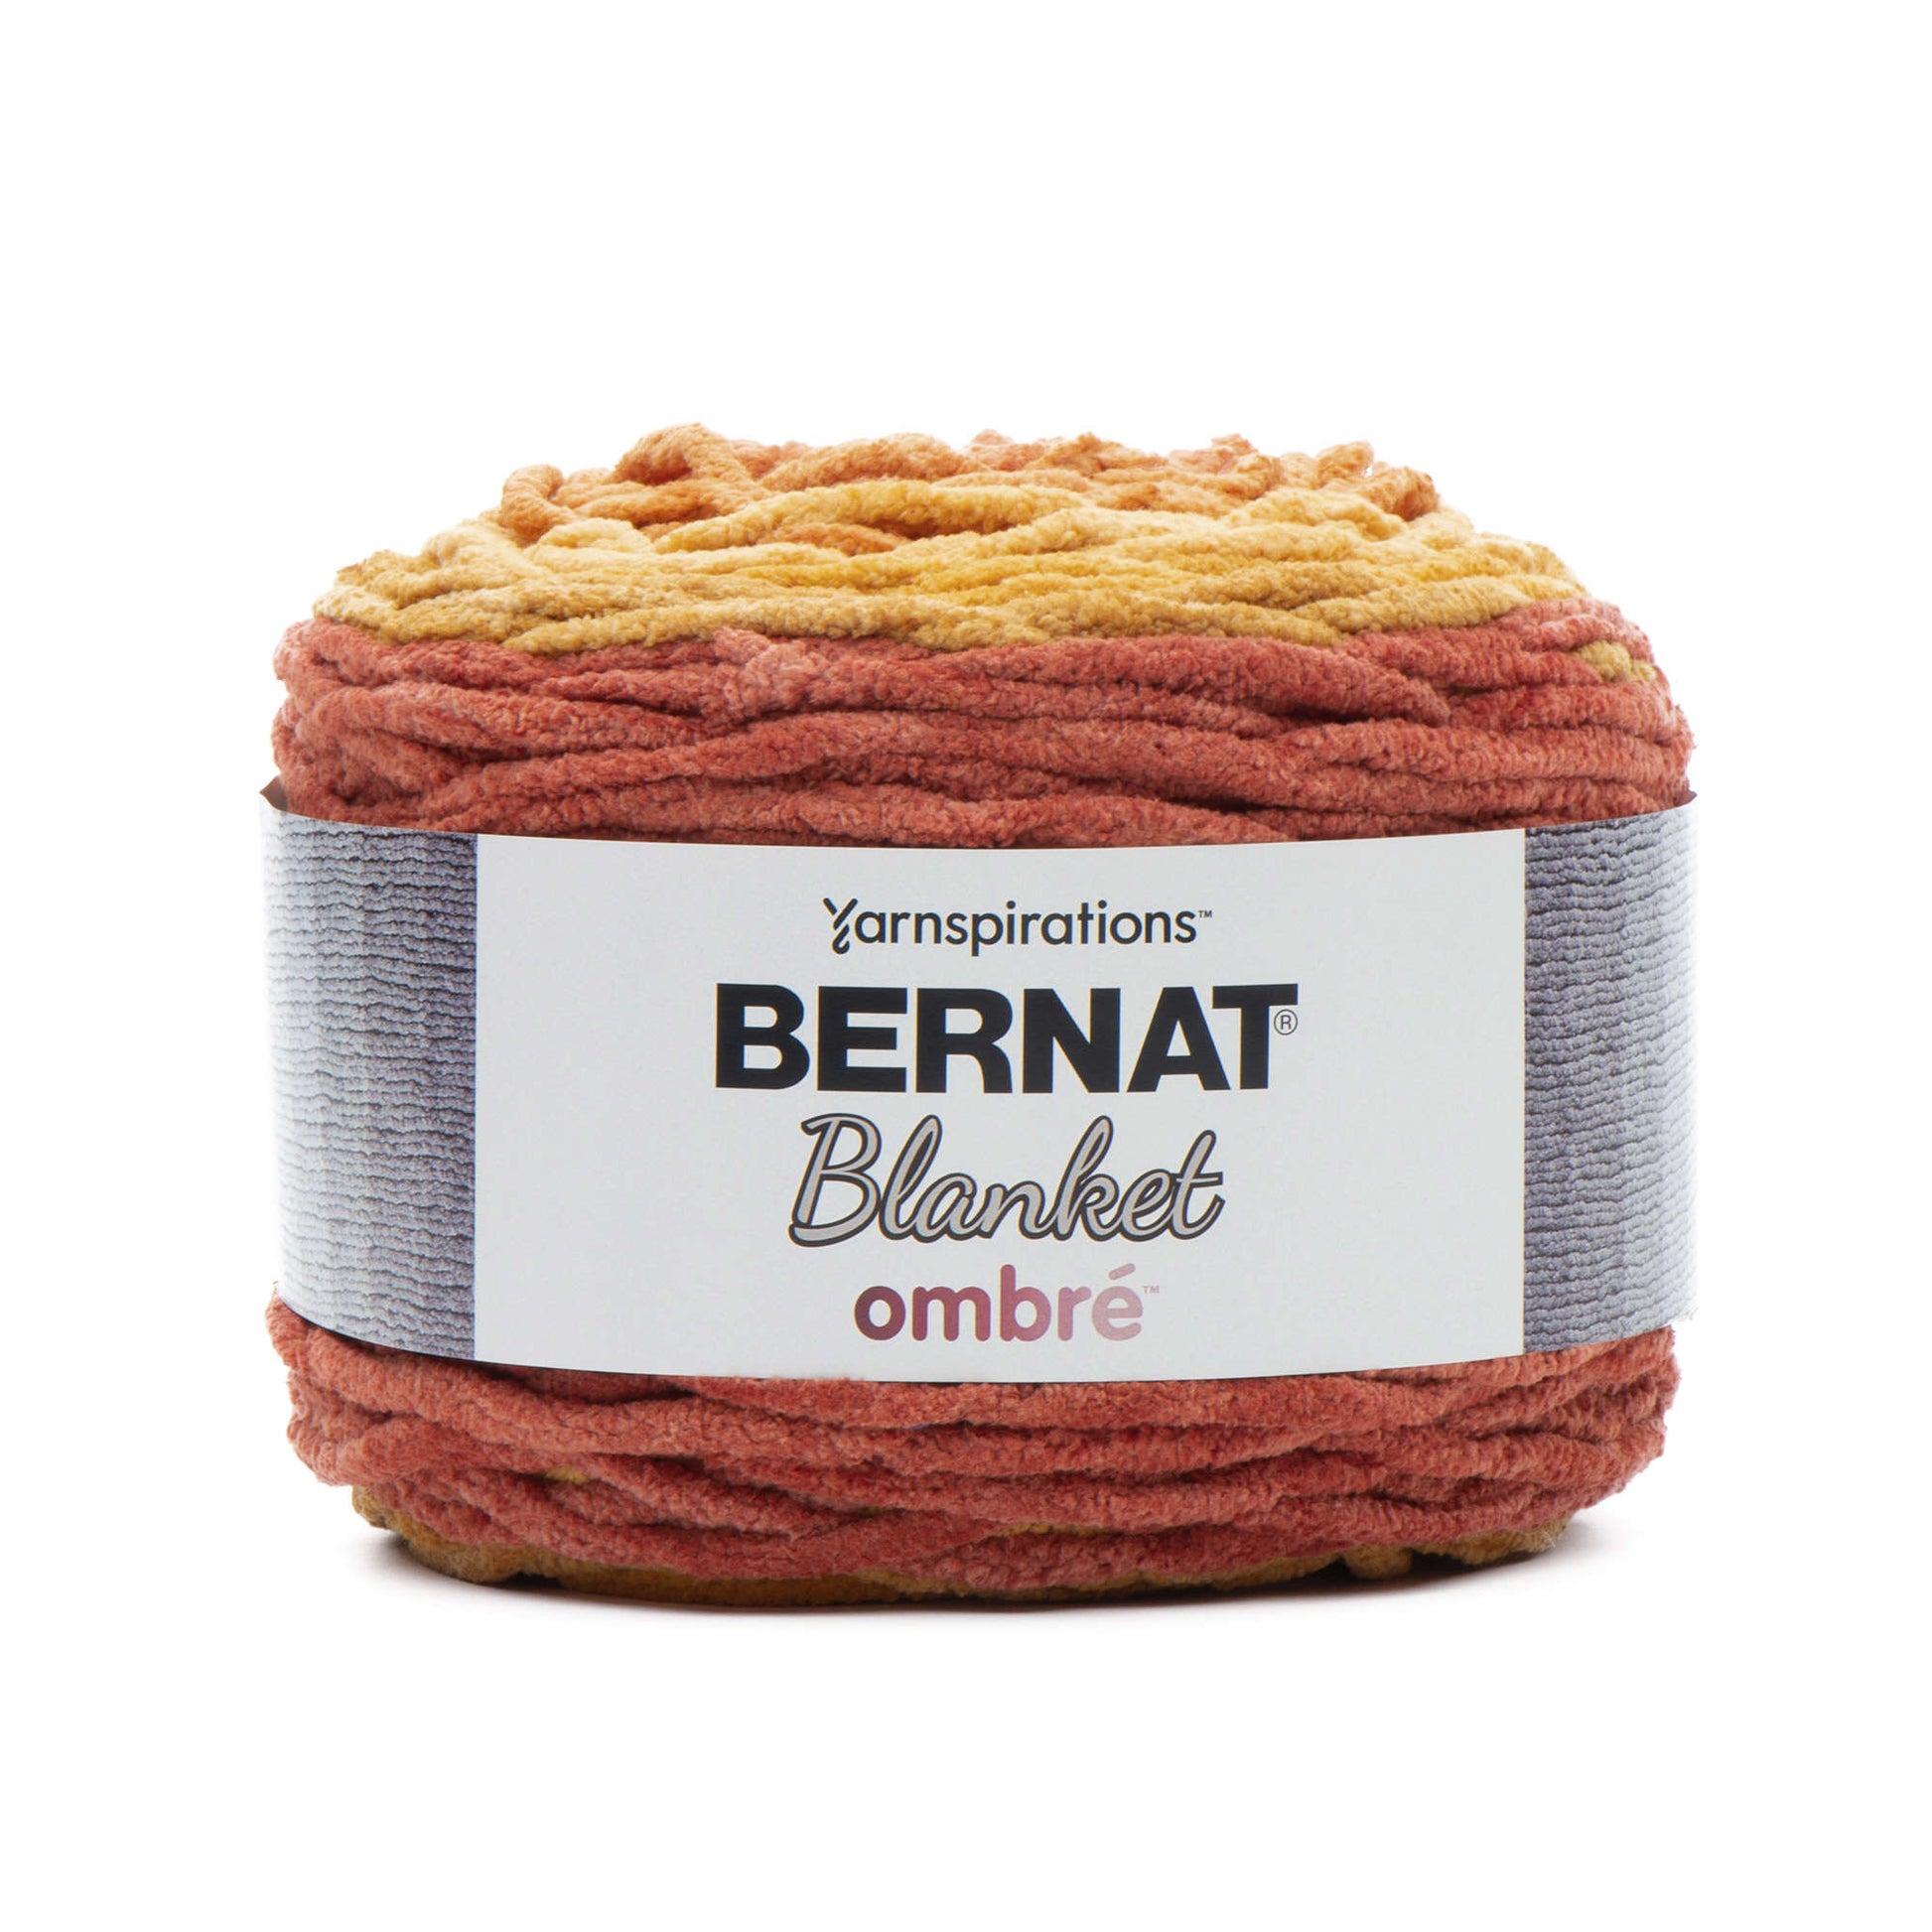 Bernat Blanket Ombres Yarn (300g/10.5oz) Orange Crush Ombre